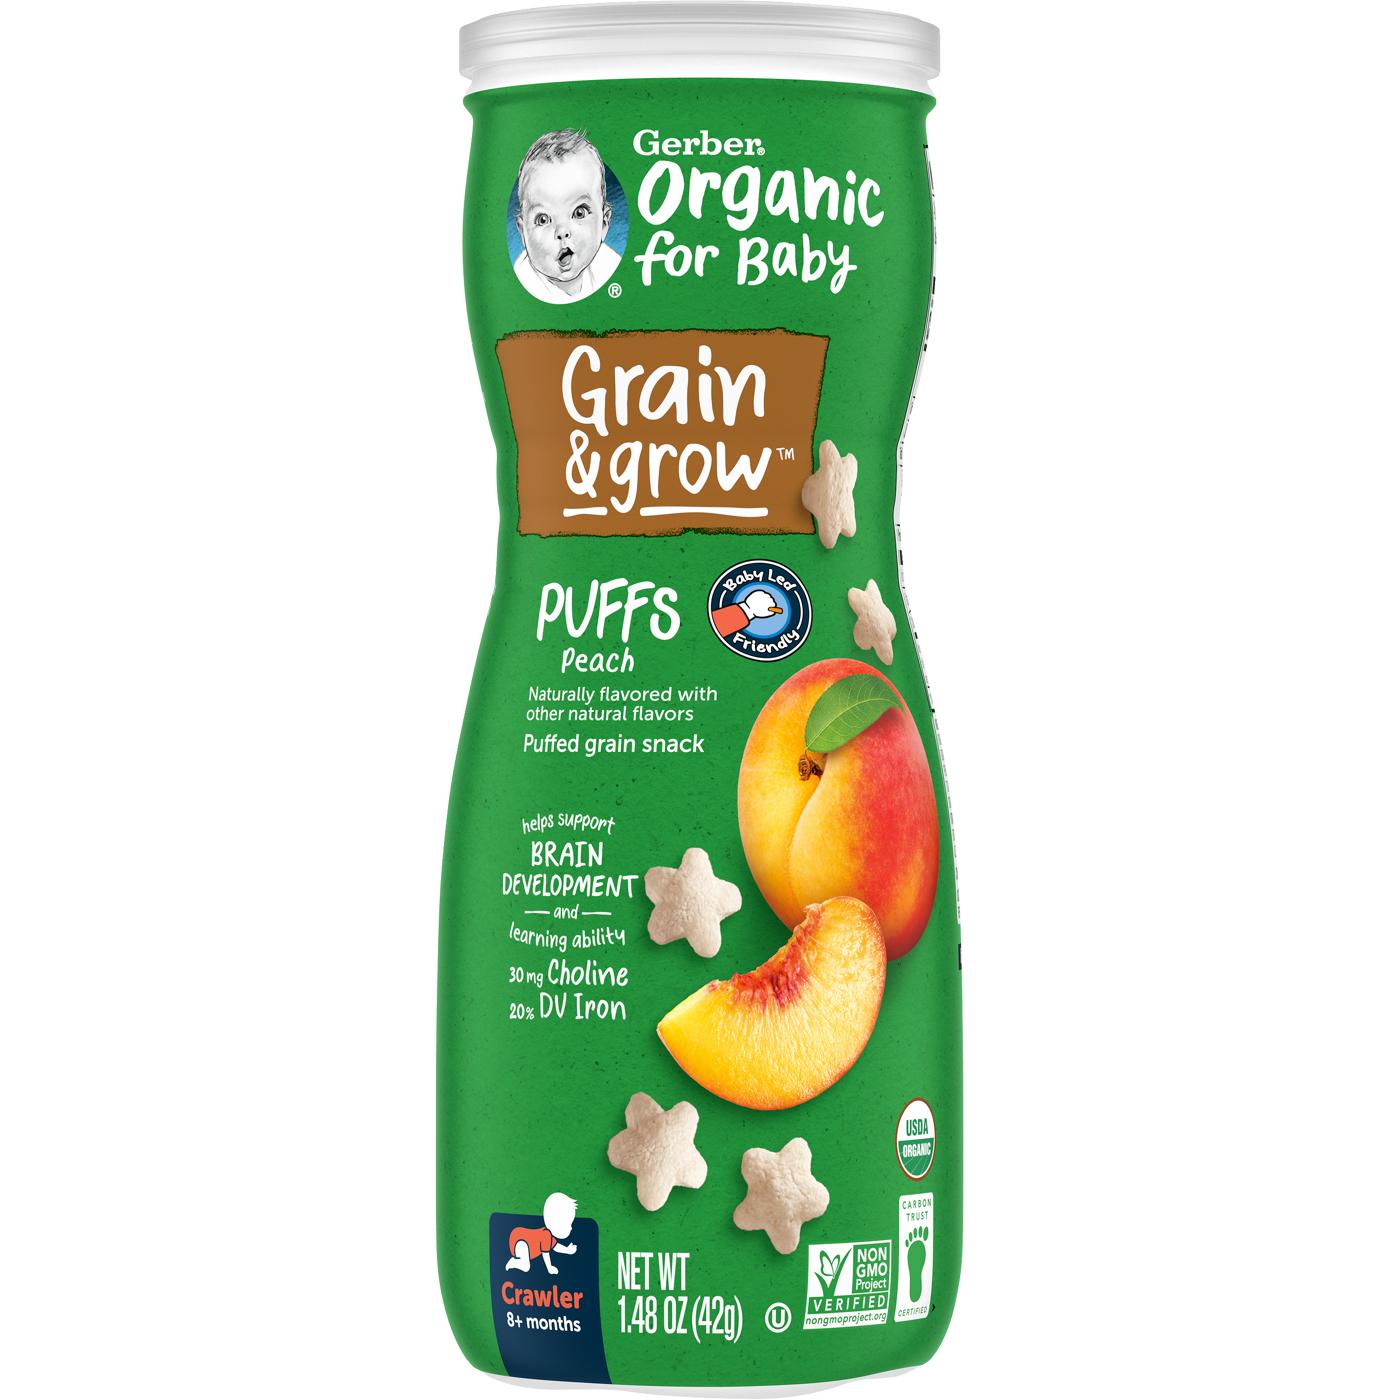 Gerber Organic for Baby Grain & Grow Puffs - Peach; image 1 of 2